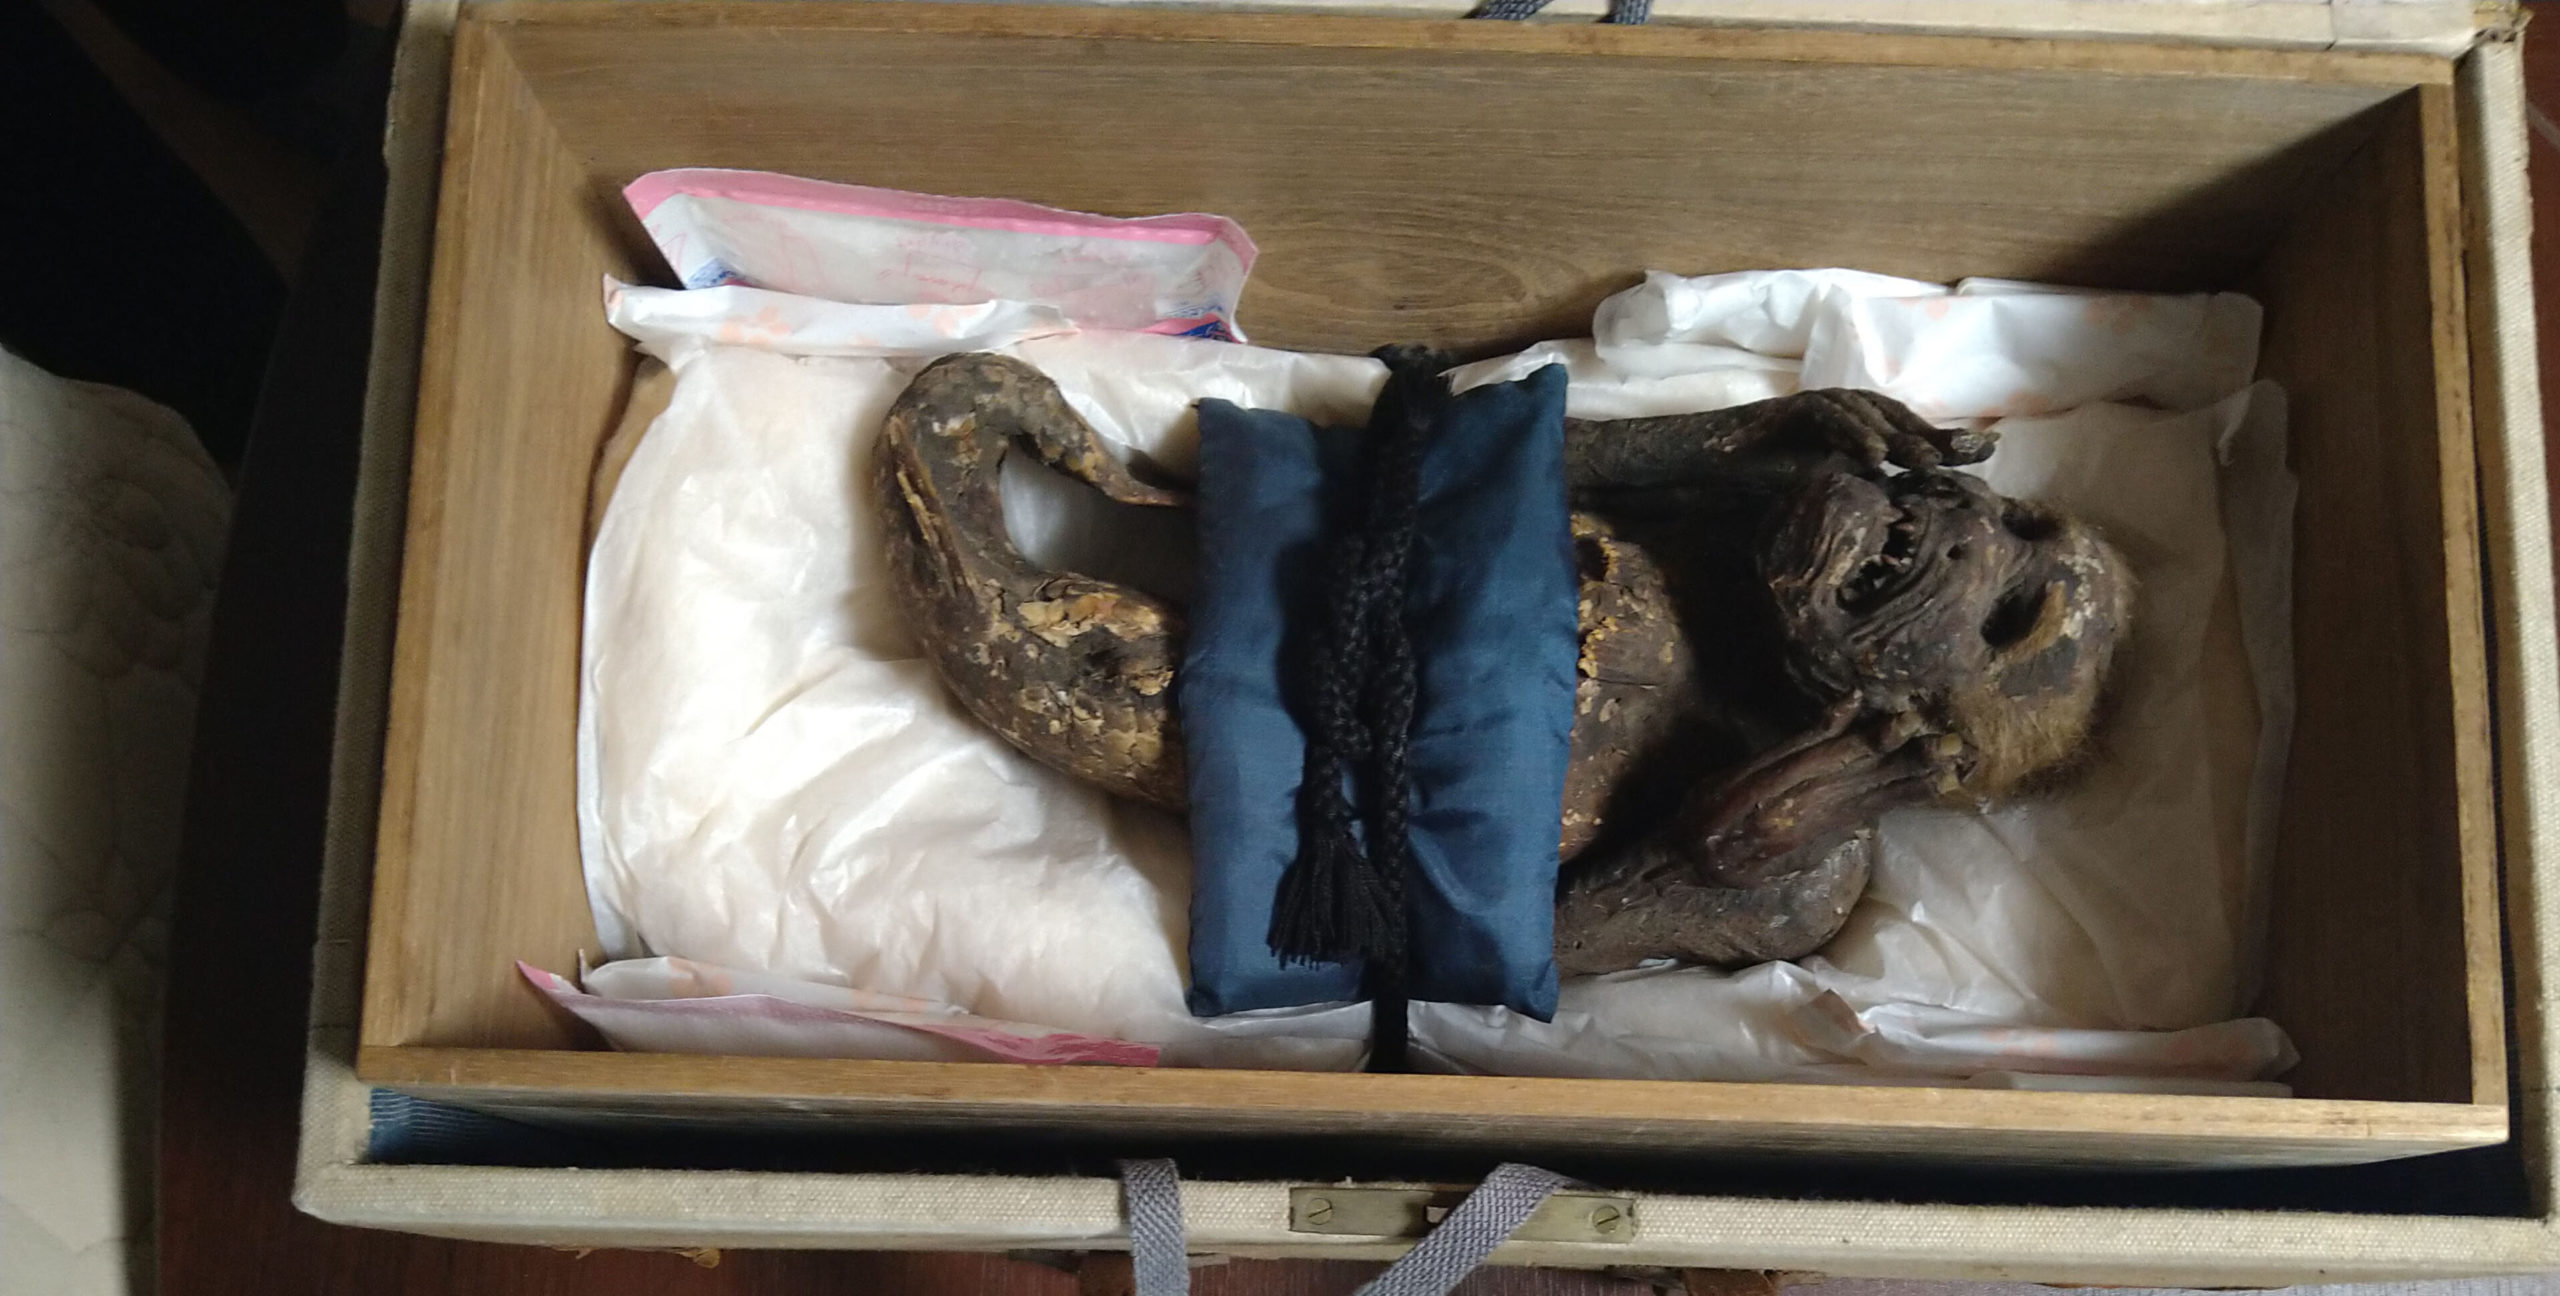 Mystery of Japan's 'Mermaid' Mummy Solved